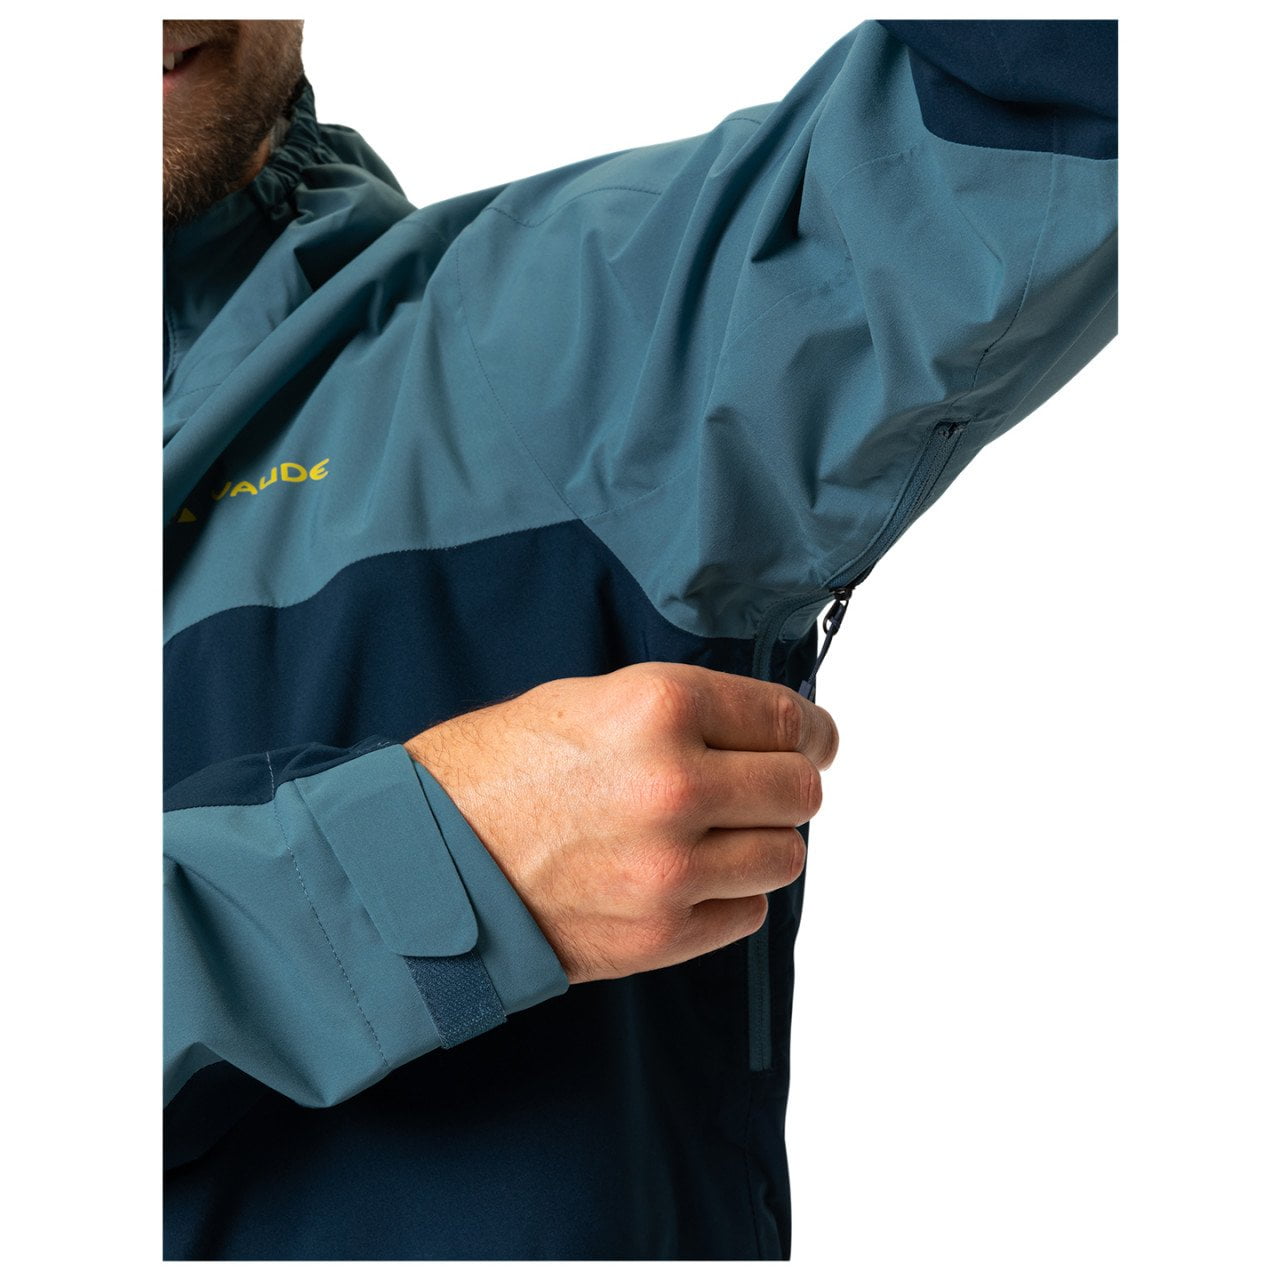 Moab MTB Waterproof Jacket